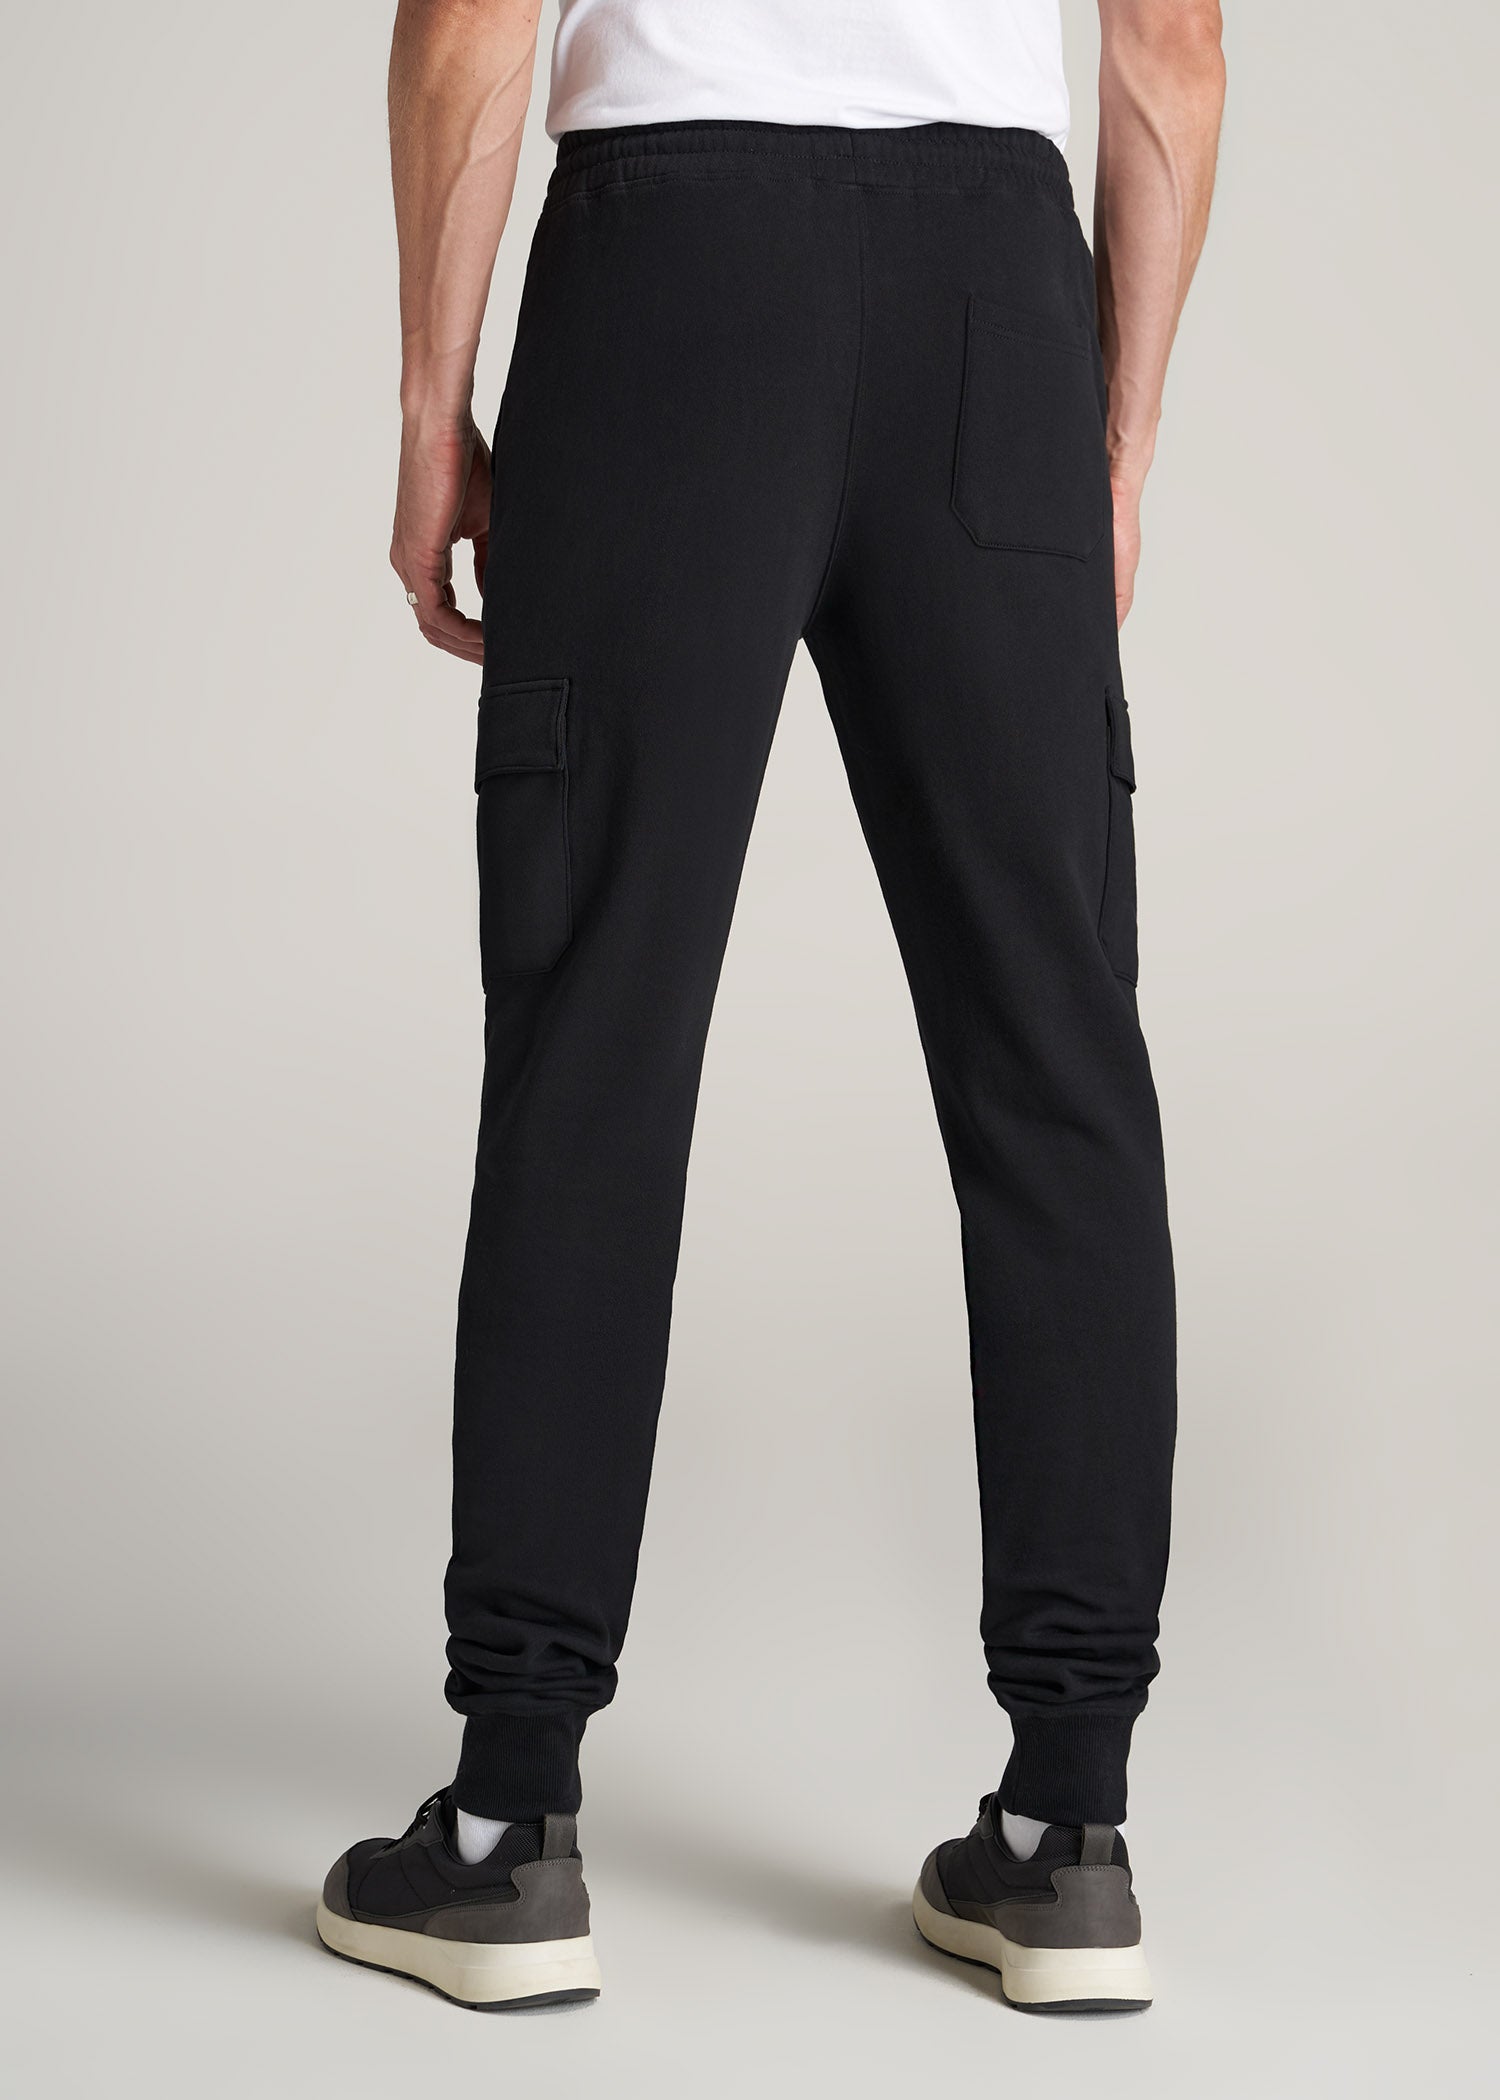 Wearever Fleece Elastic-Bottom Sweatpants for Tall Men in Black S / Tall / Black